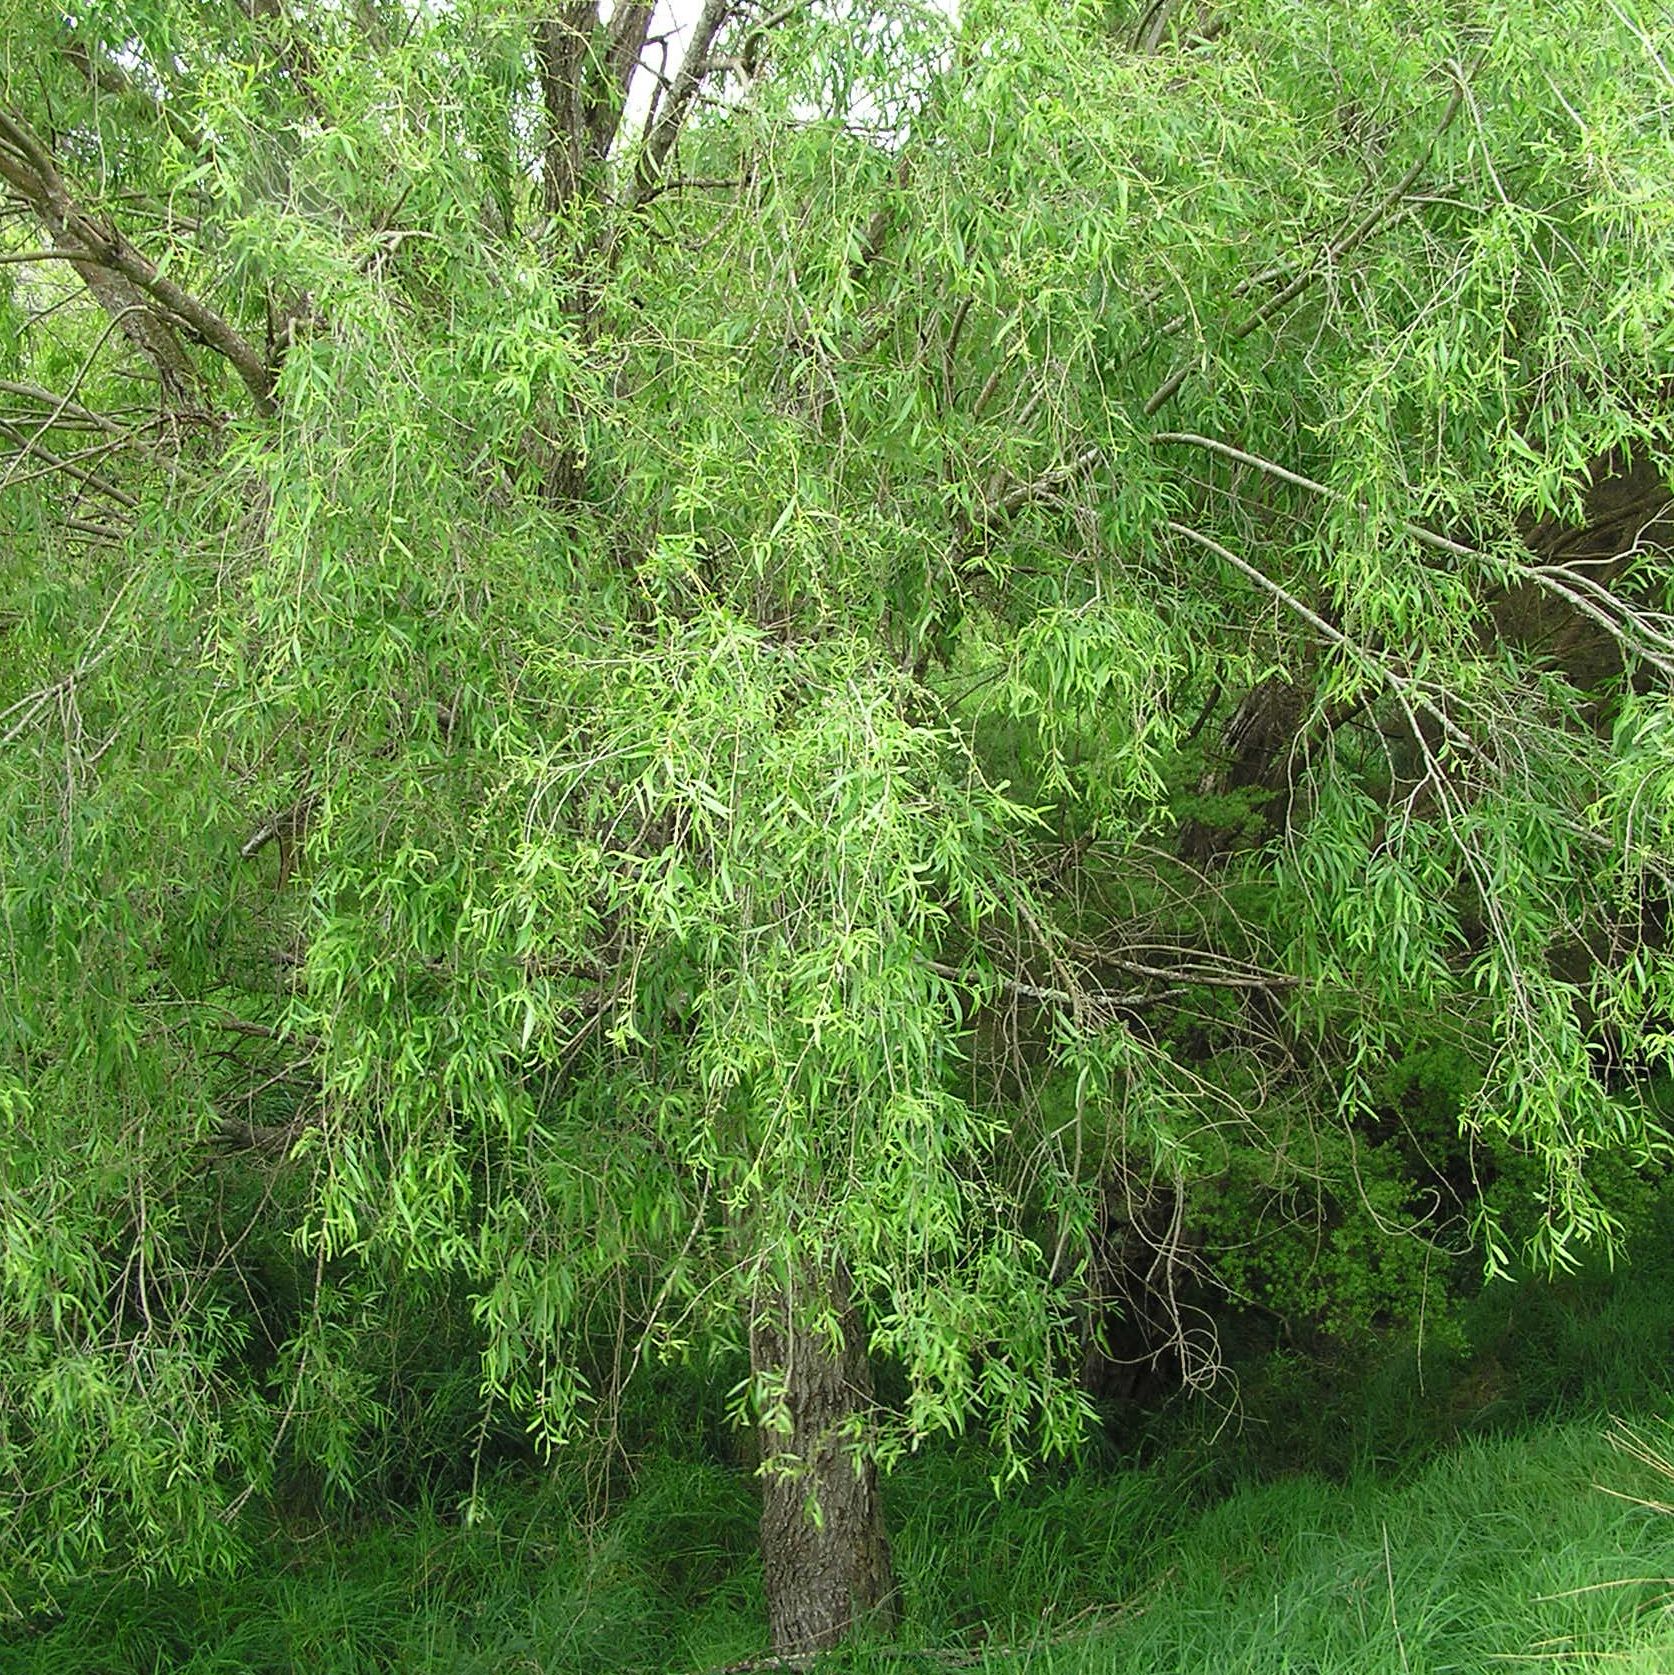 grey willow tree